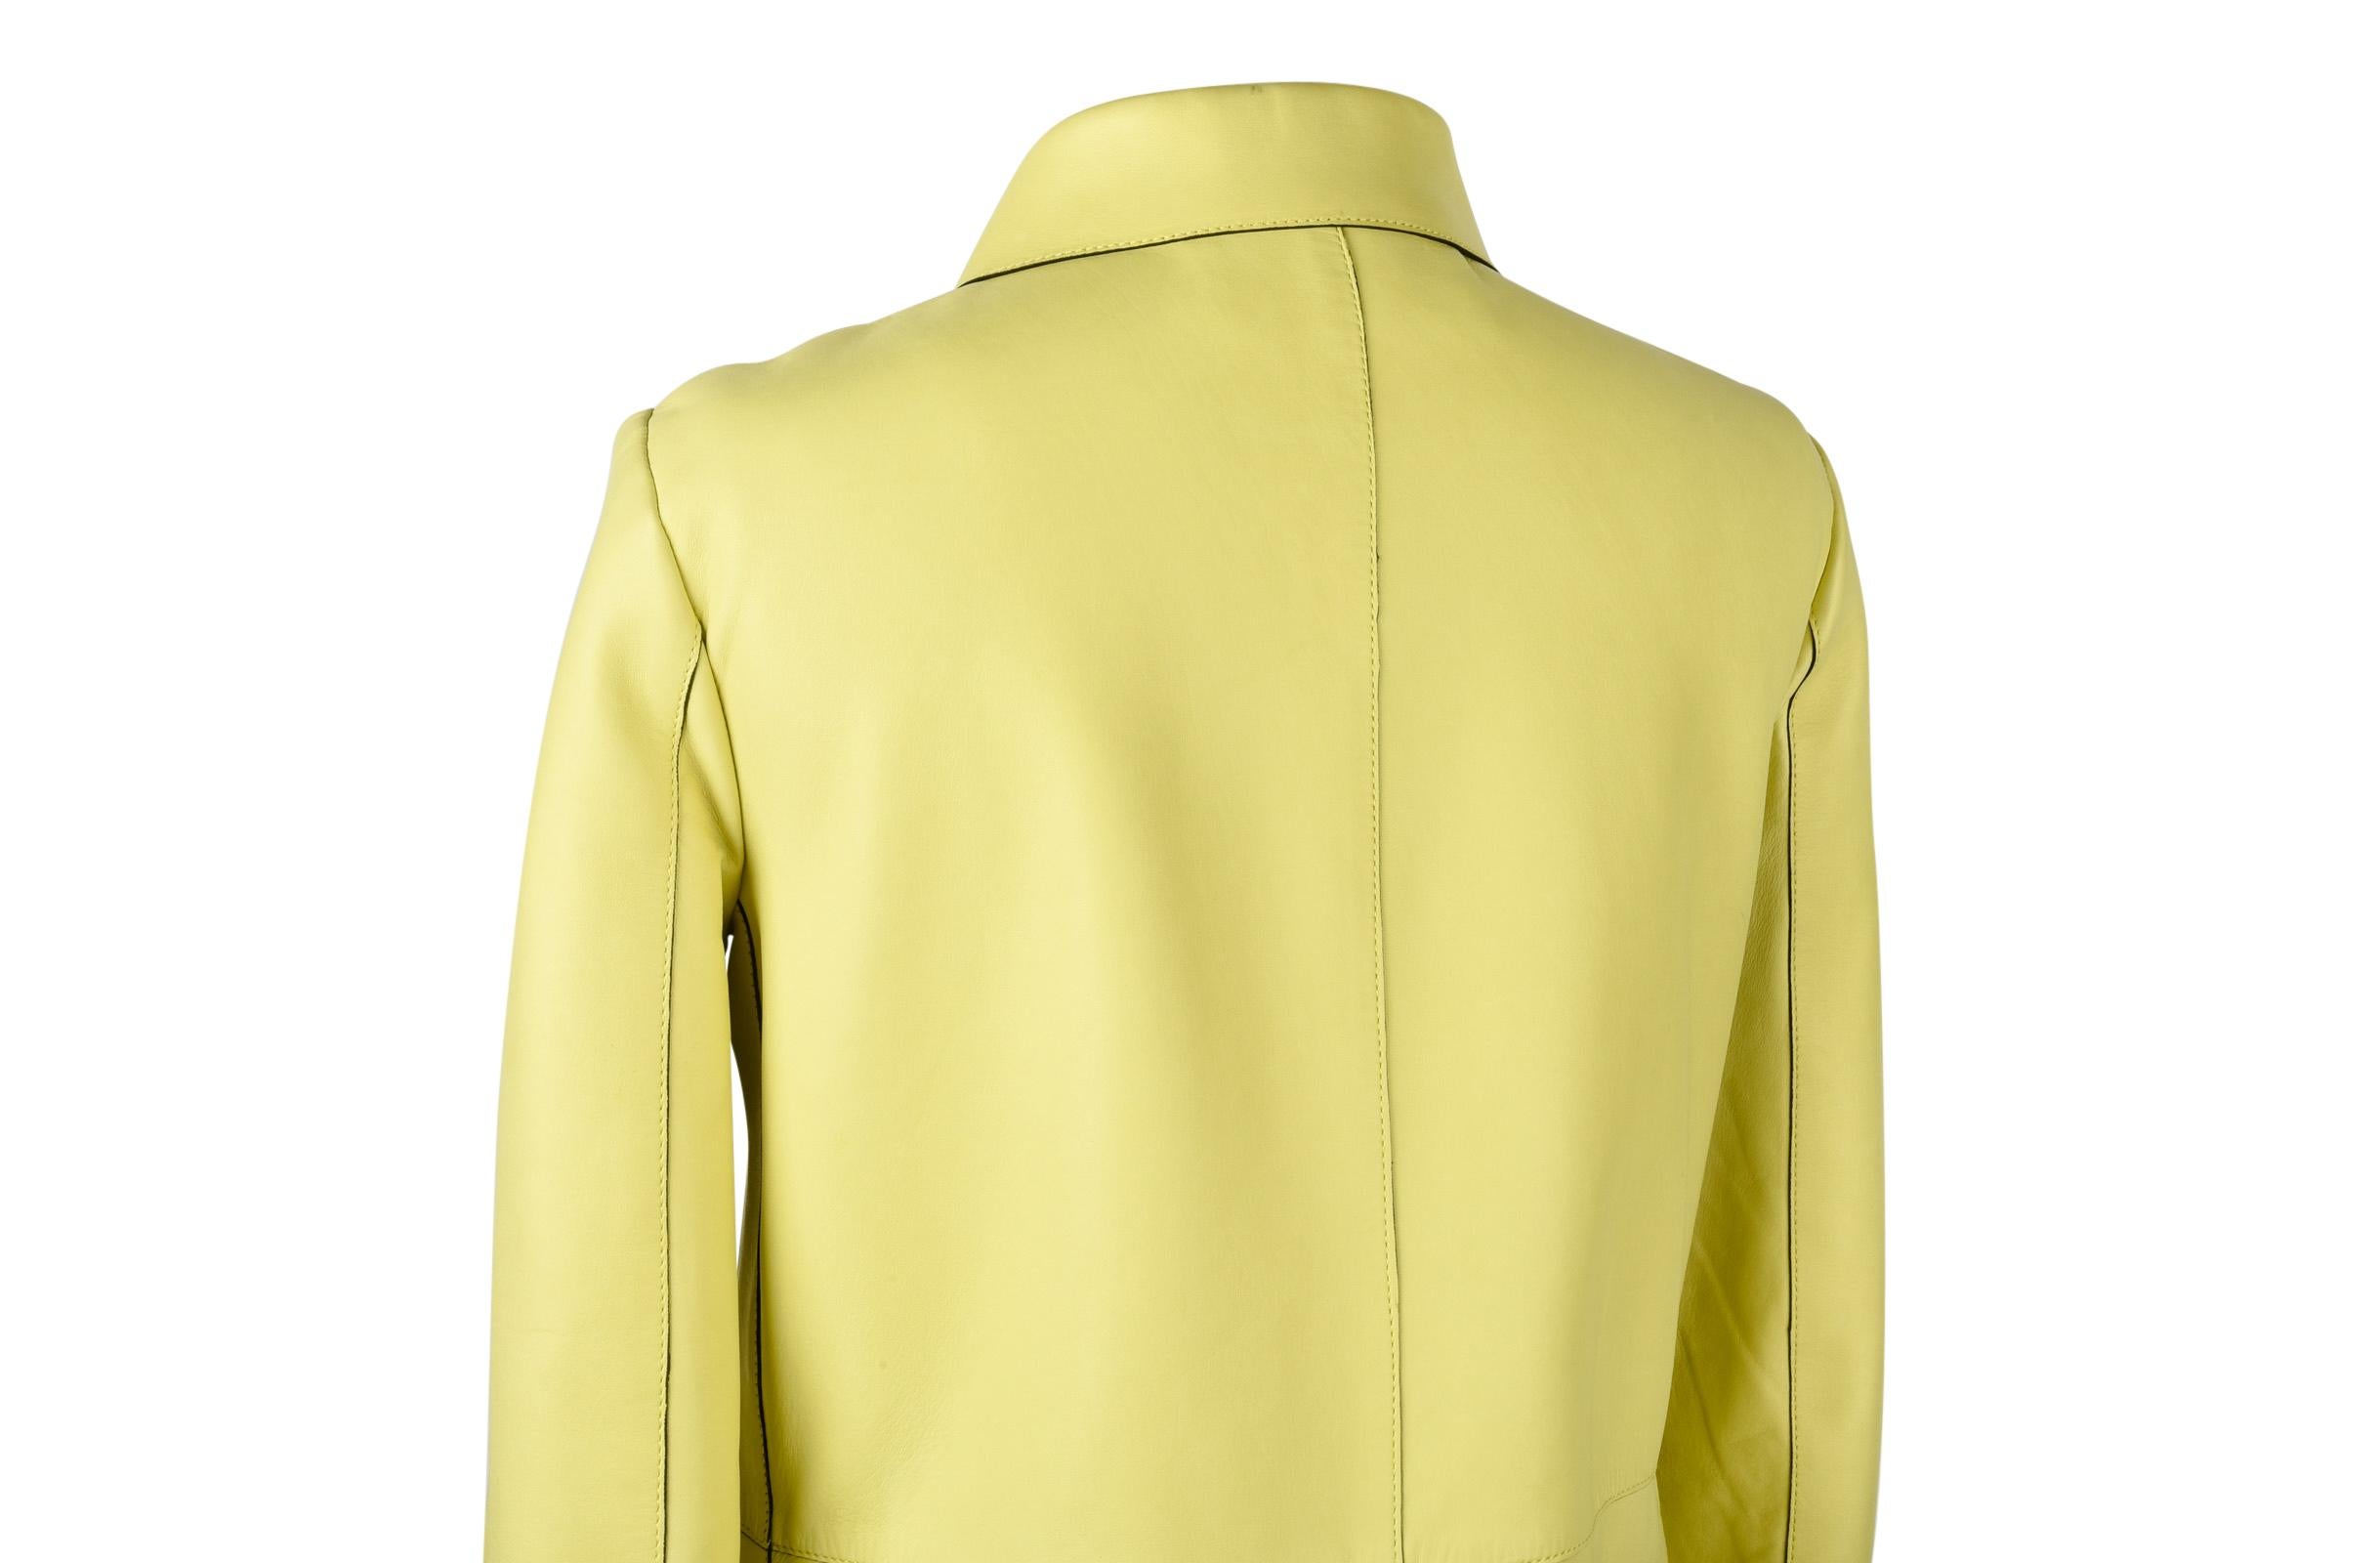 Gucci Coat Lambskin Leather Lime Yellow 40 / 8 7